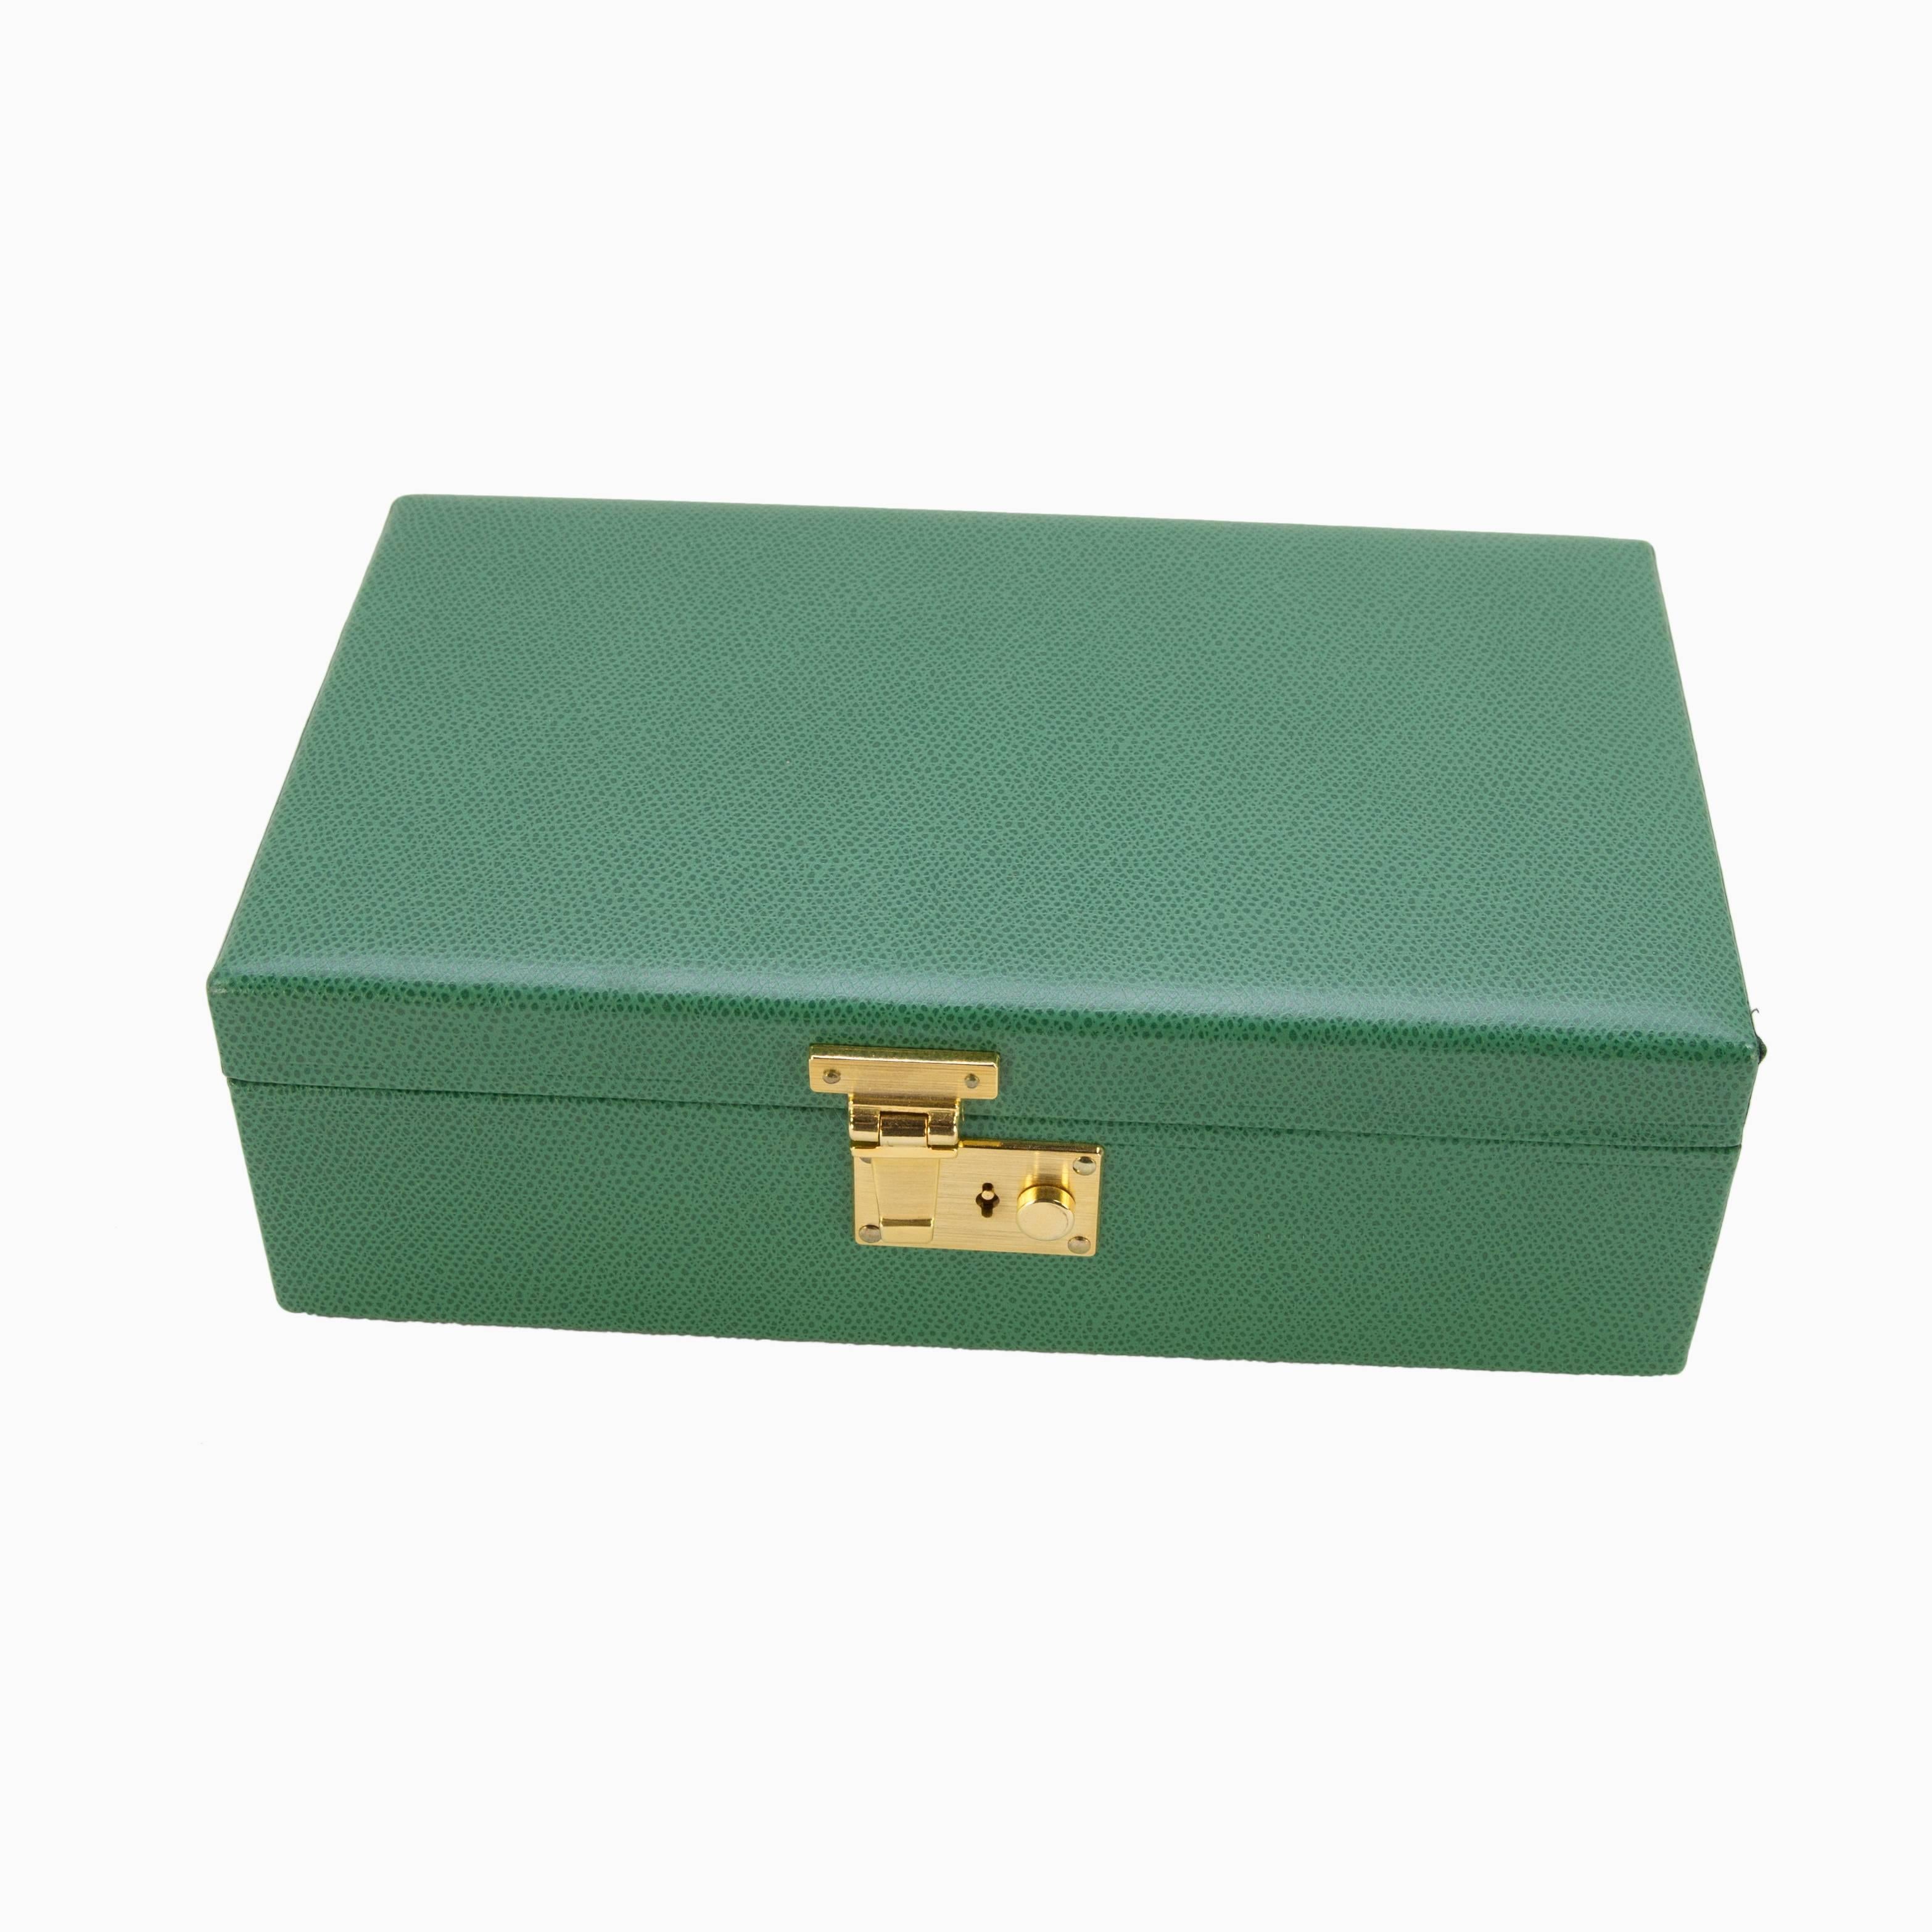 Modern Tanner Krolle Green Leather Jewelry Box London, England